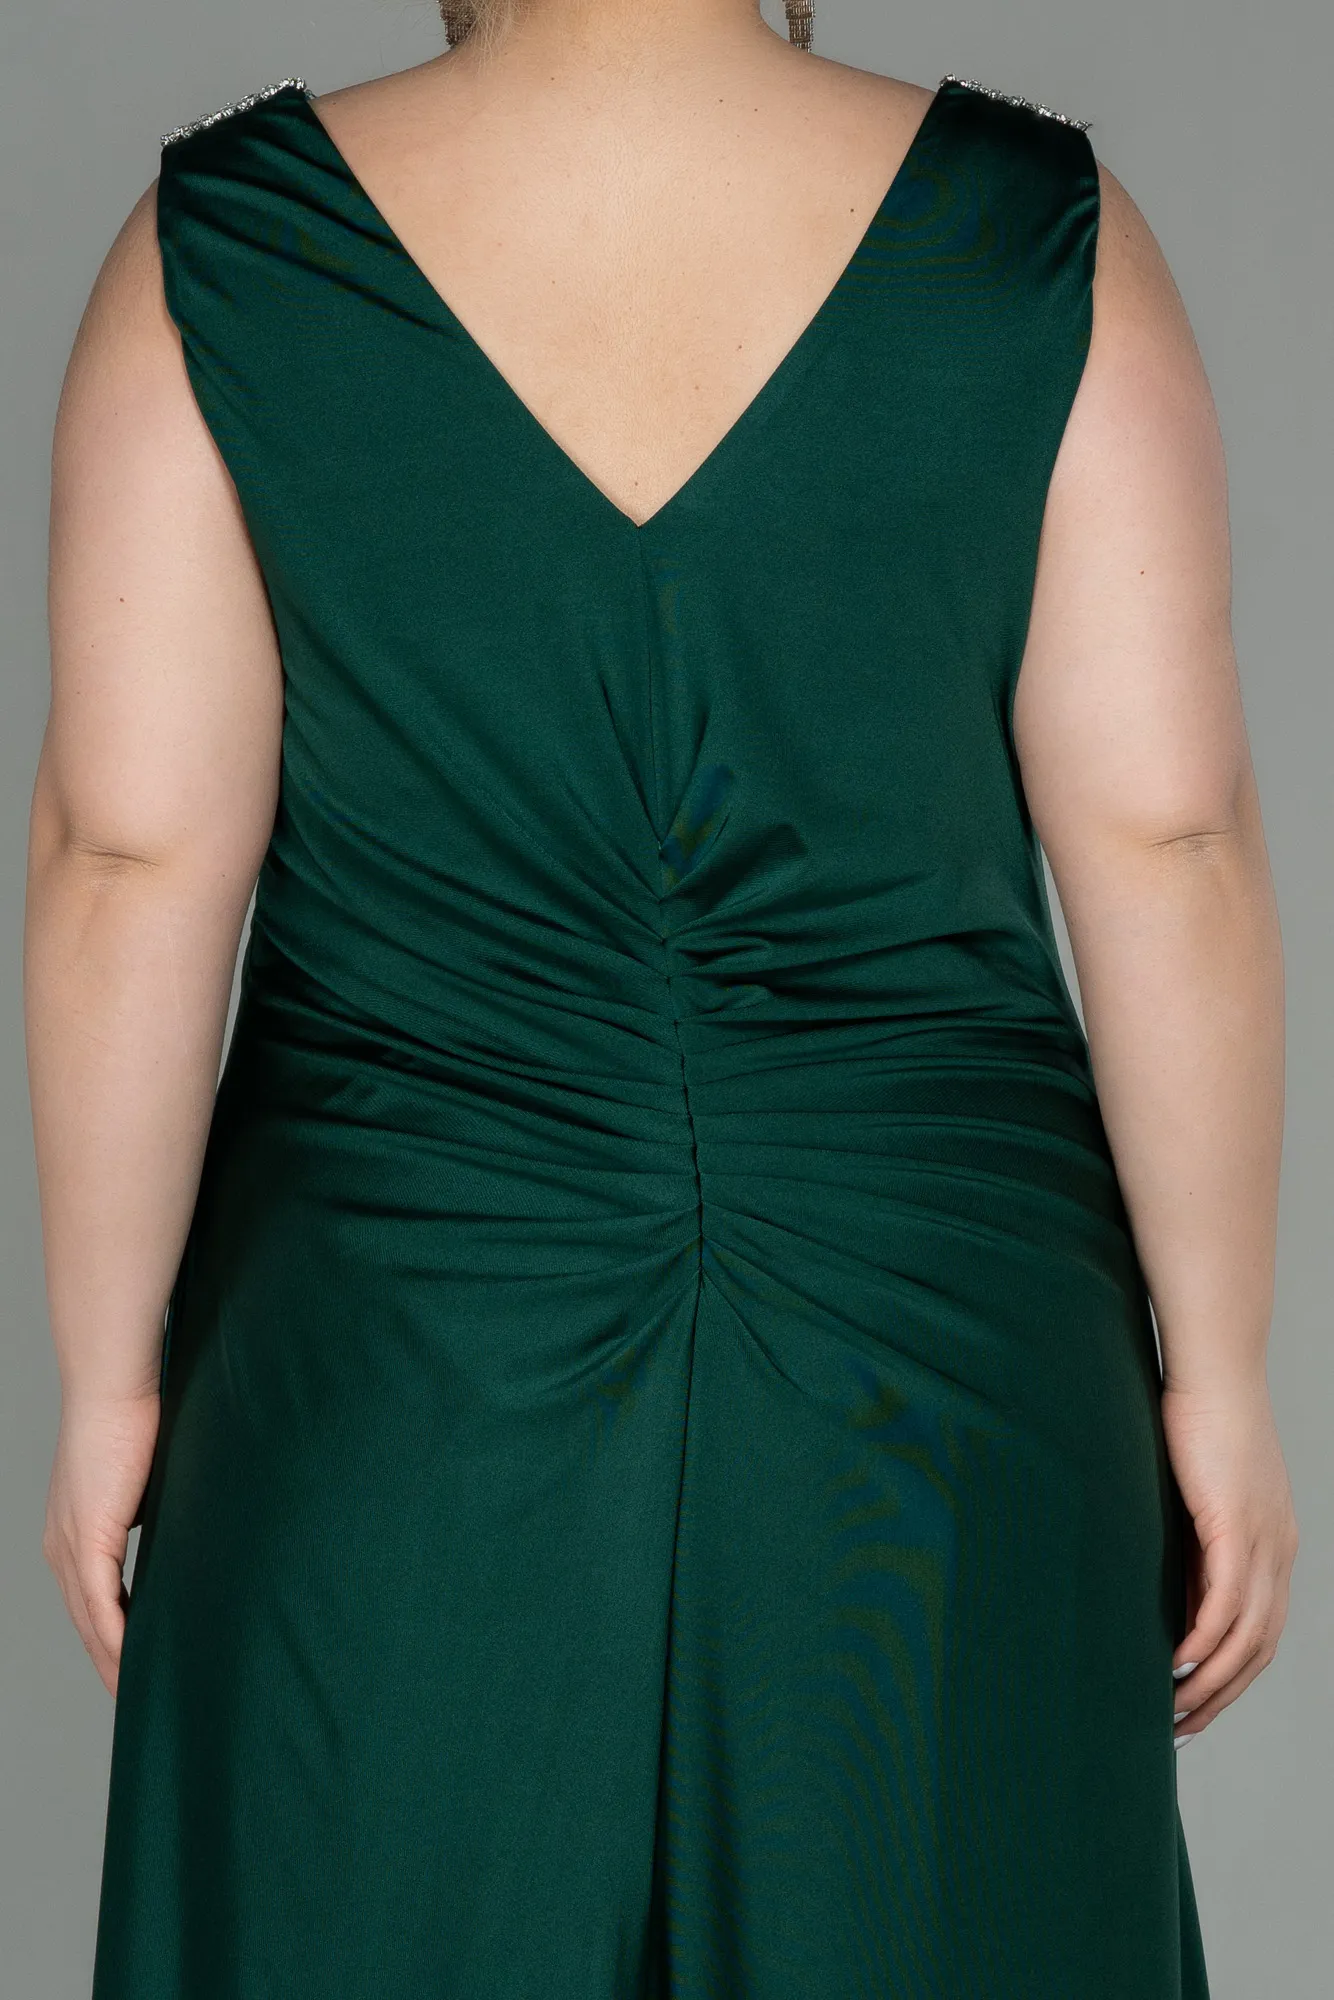 Emerald Green-Long Plus Size Evening Dress ABU3018